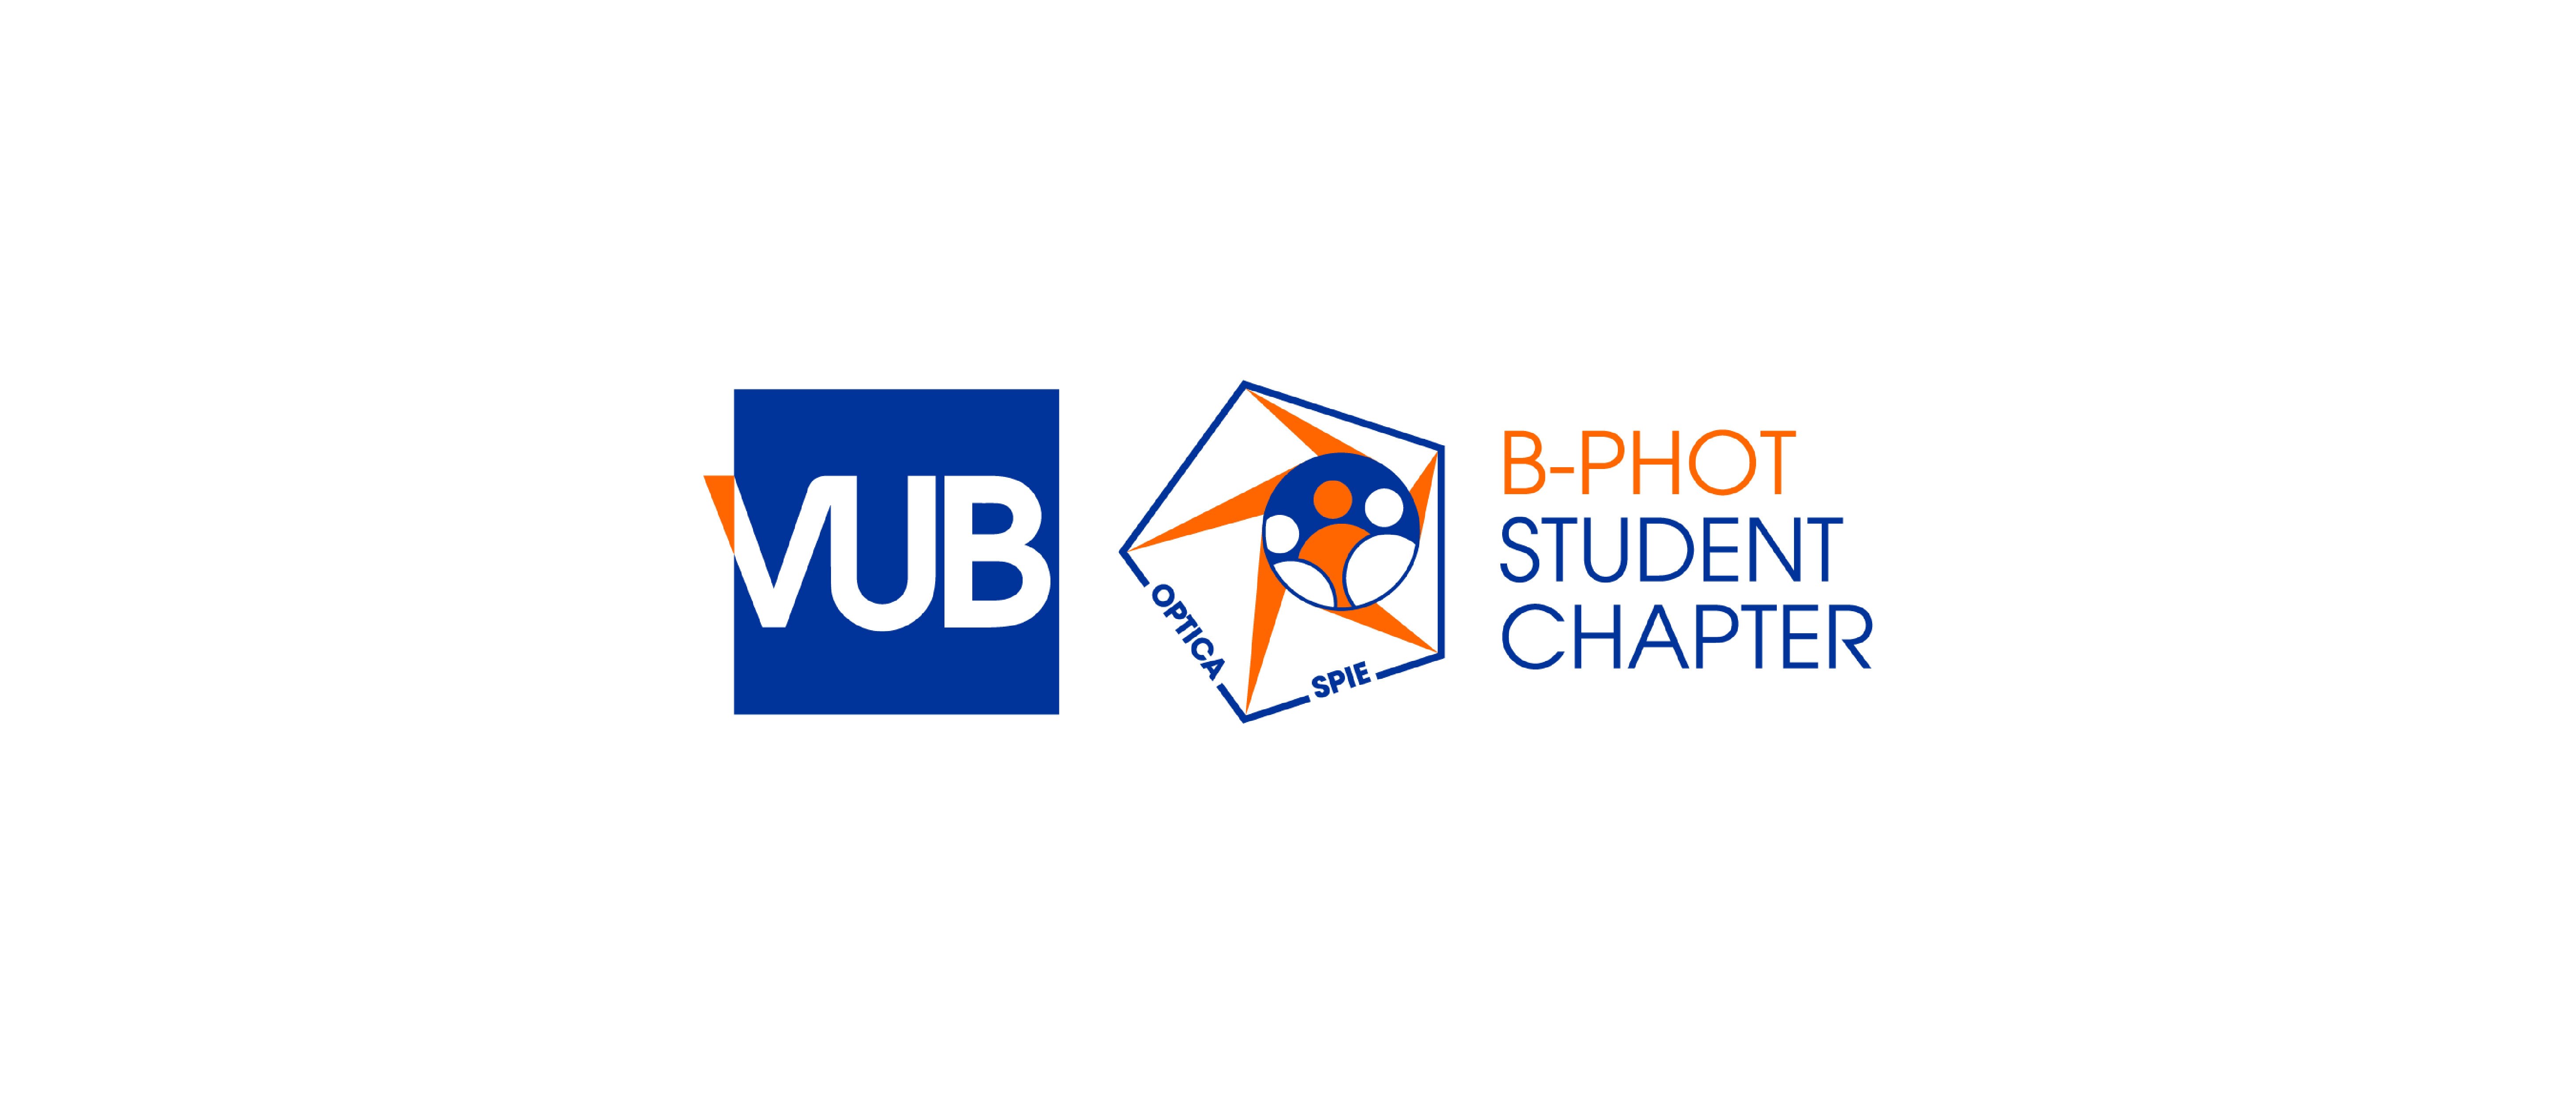 B PHOT Student Chapter logo 2021 01